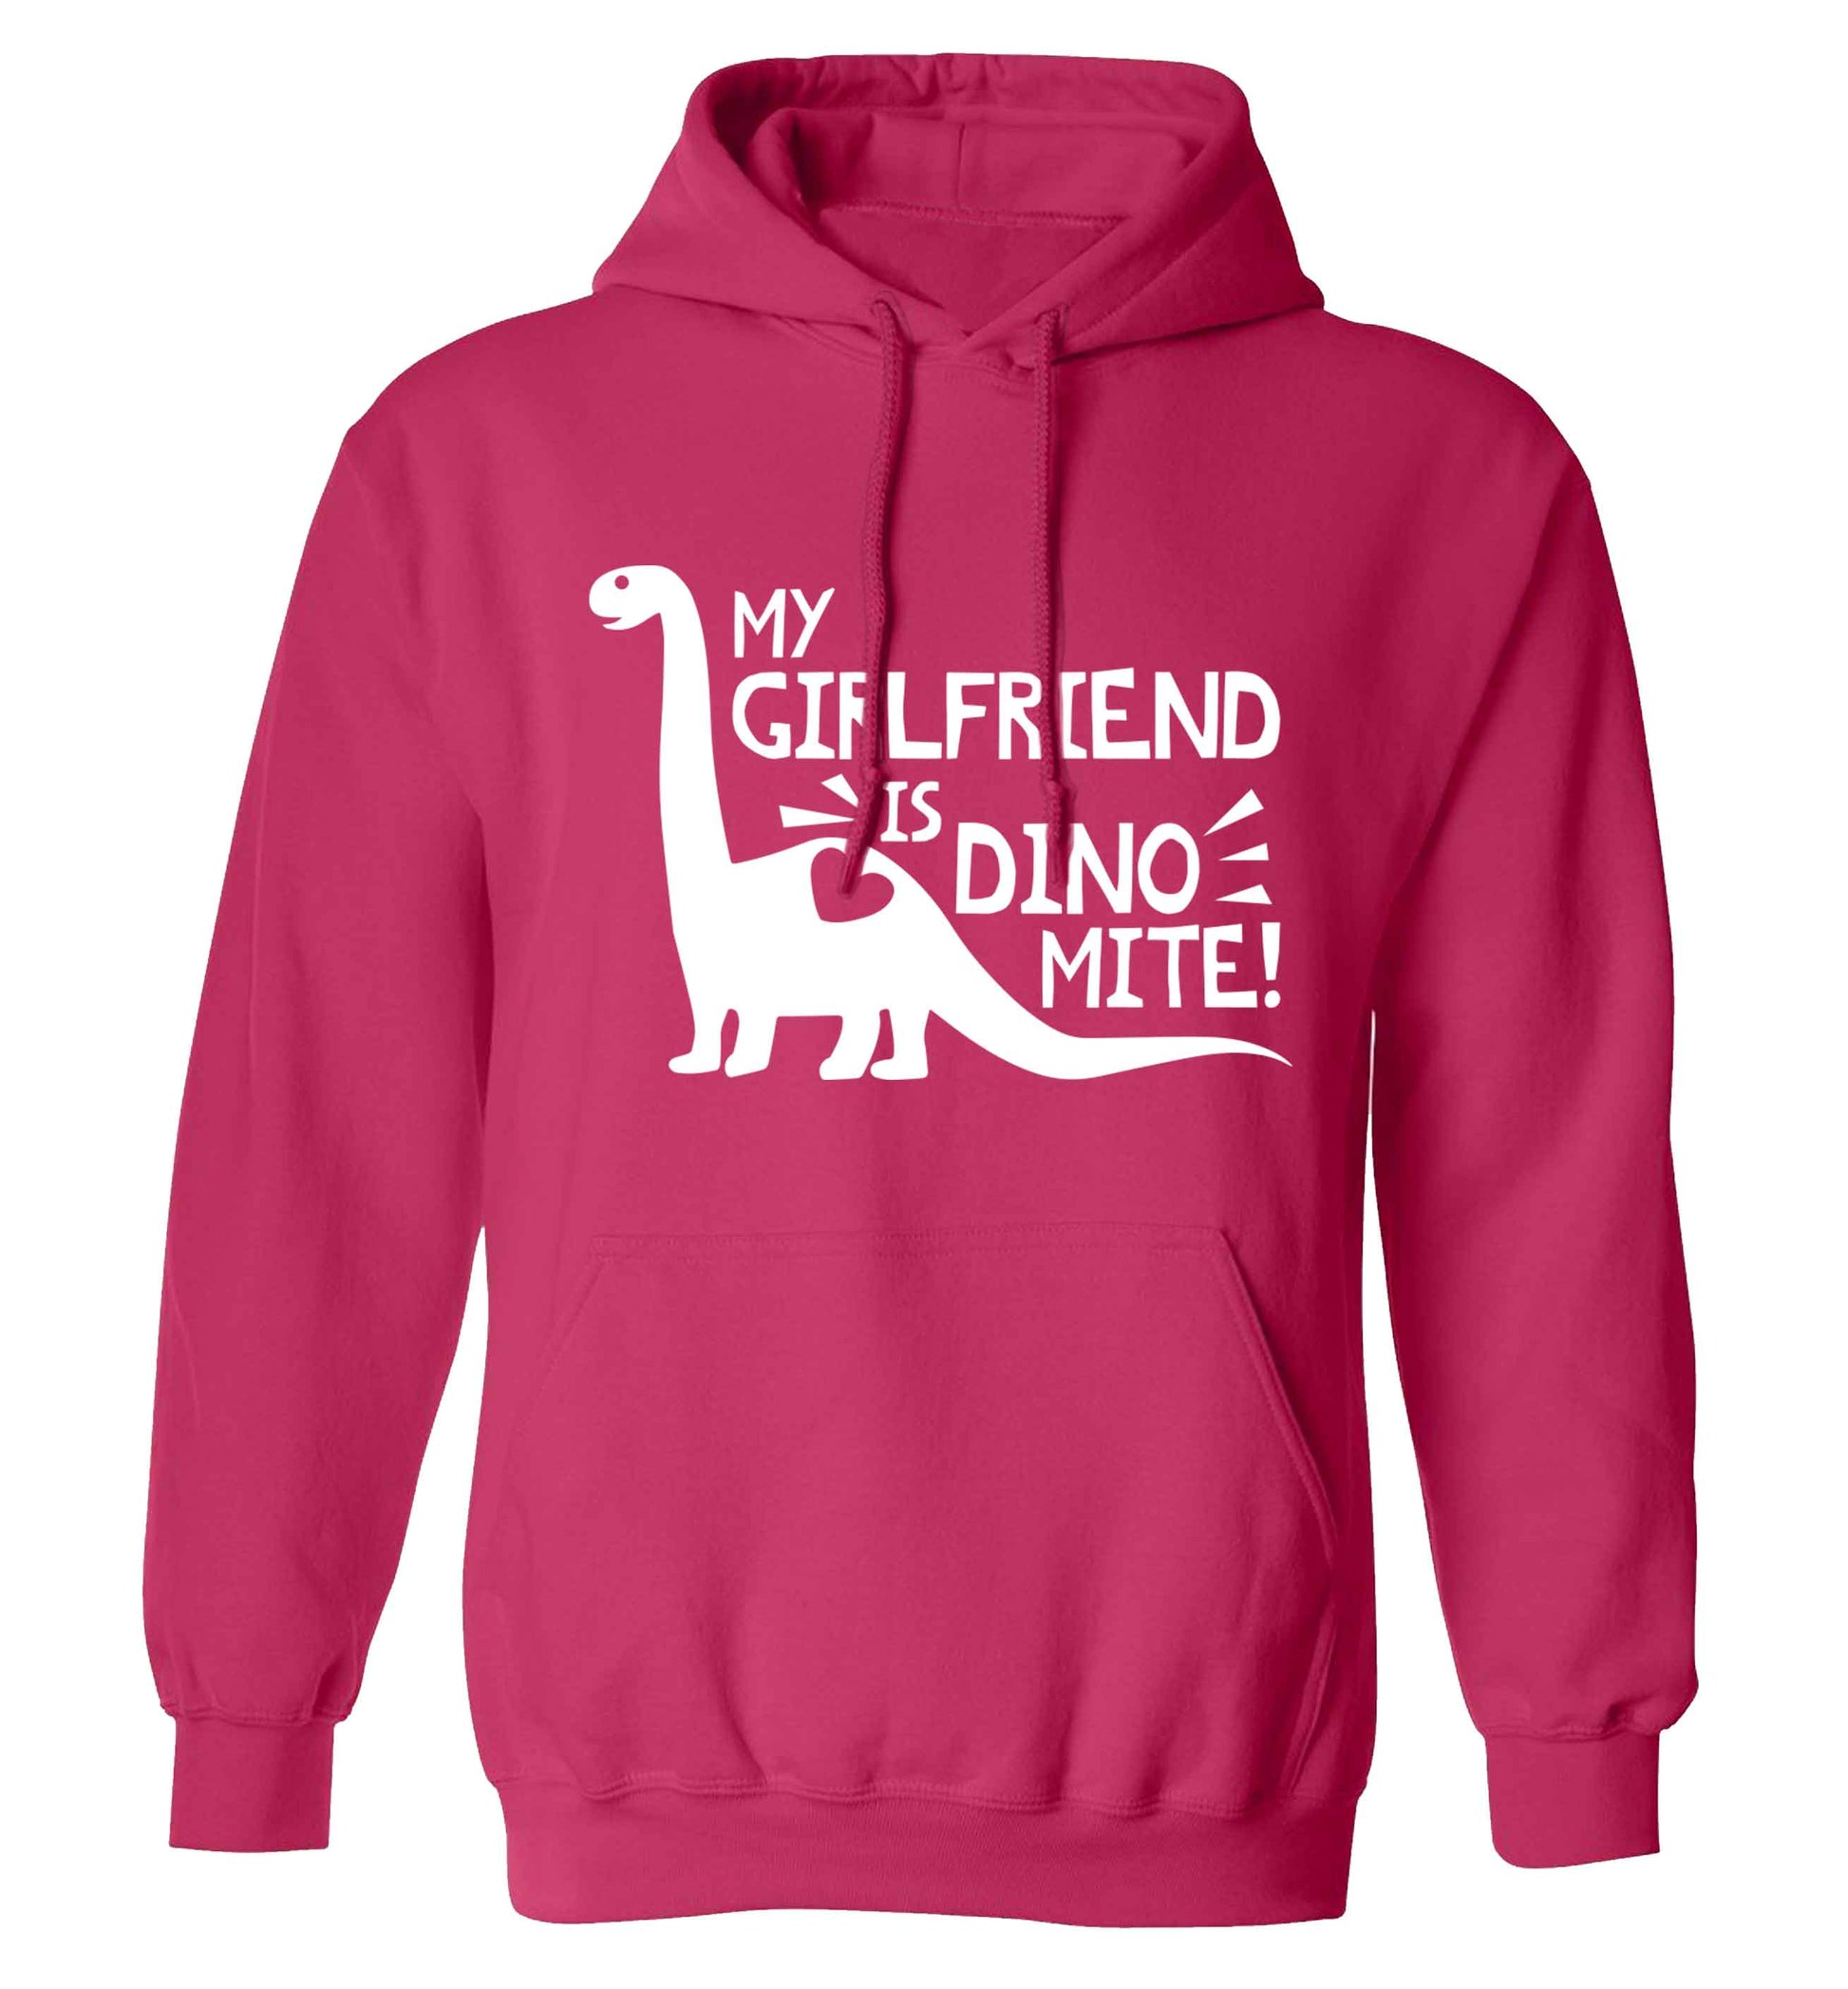 My girlfriend is dinomite! adults unisex pink hoodie 2XL